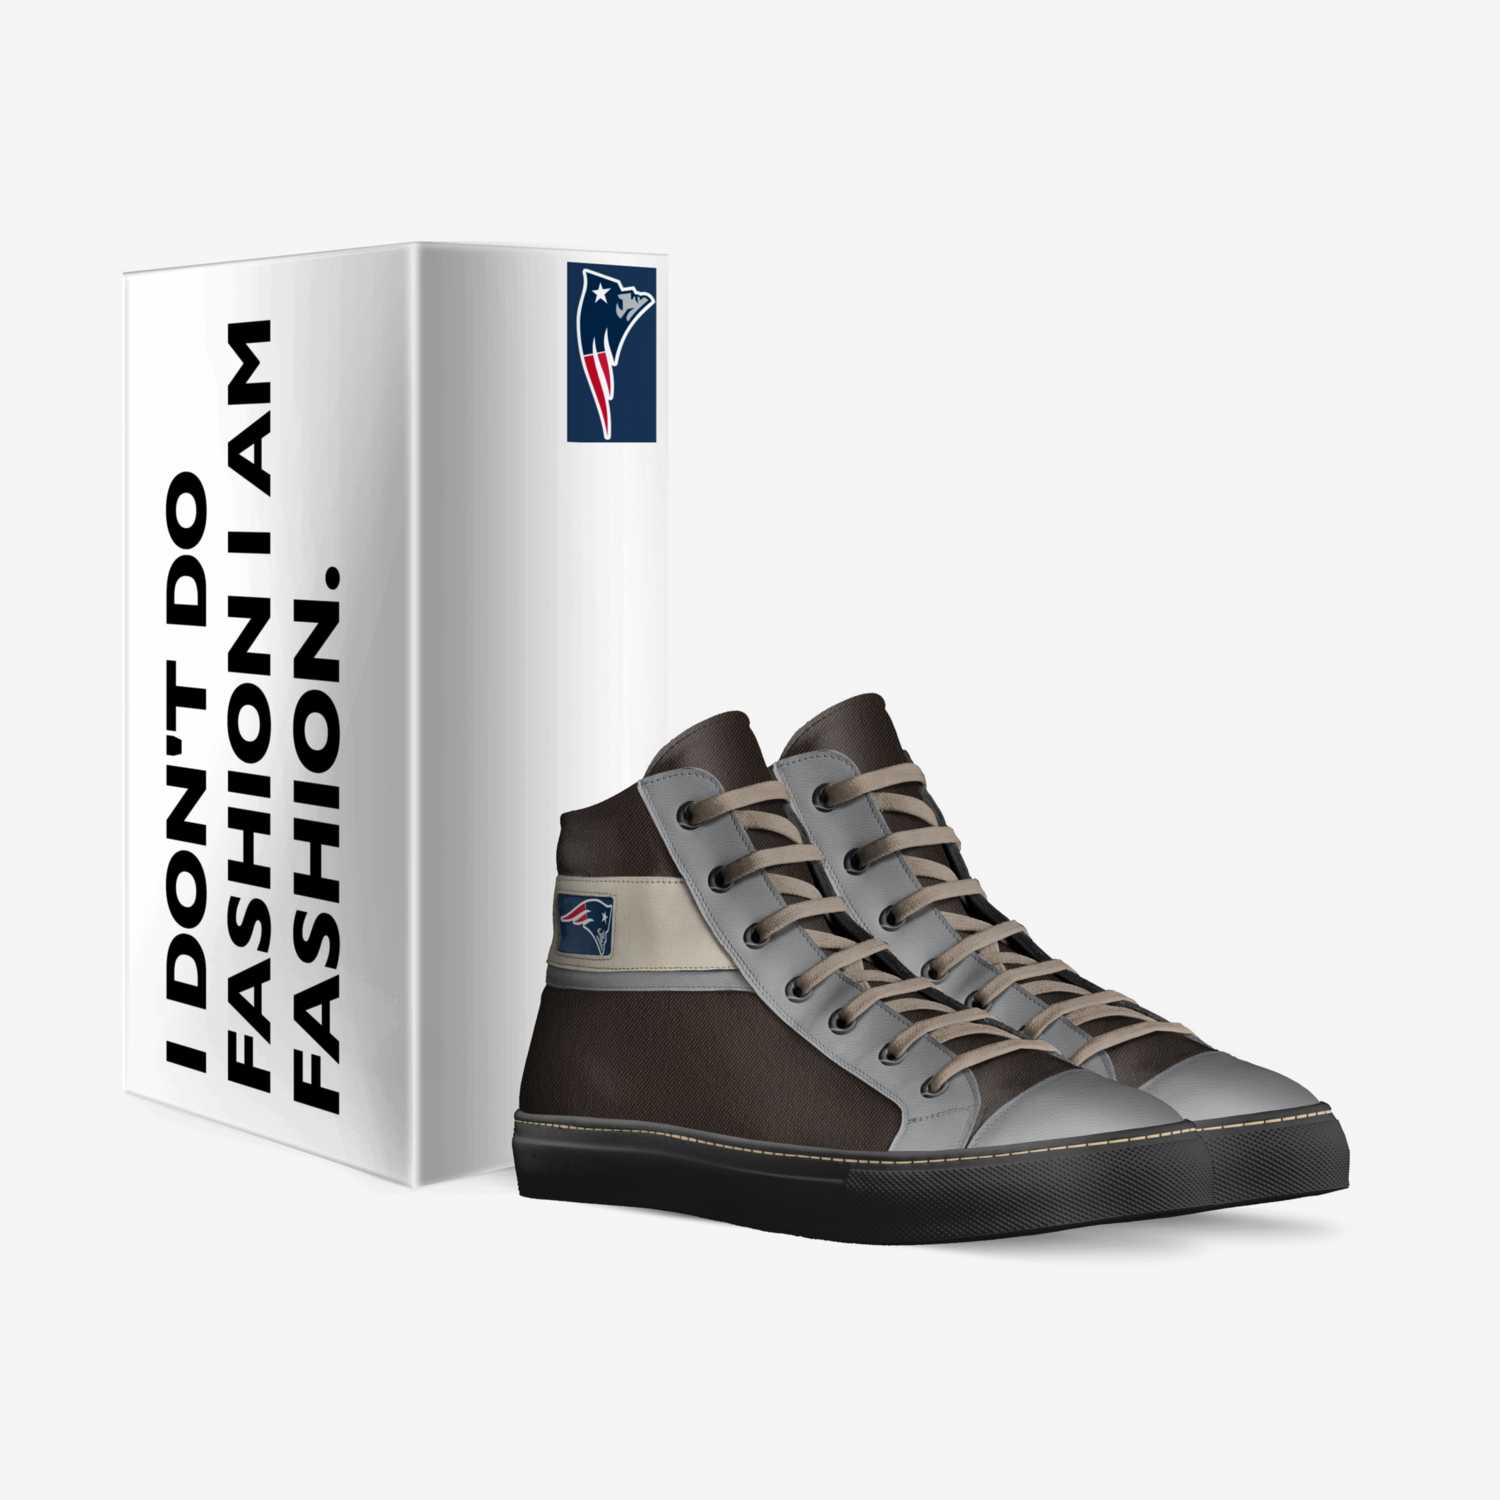 Fatboys custom made in Italy shoes by Ishida Kirigaya | Box view